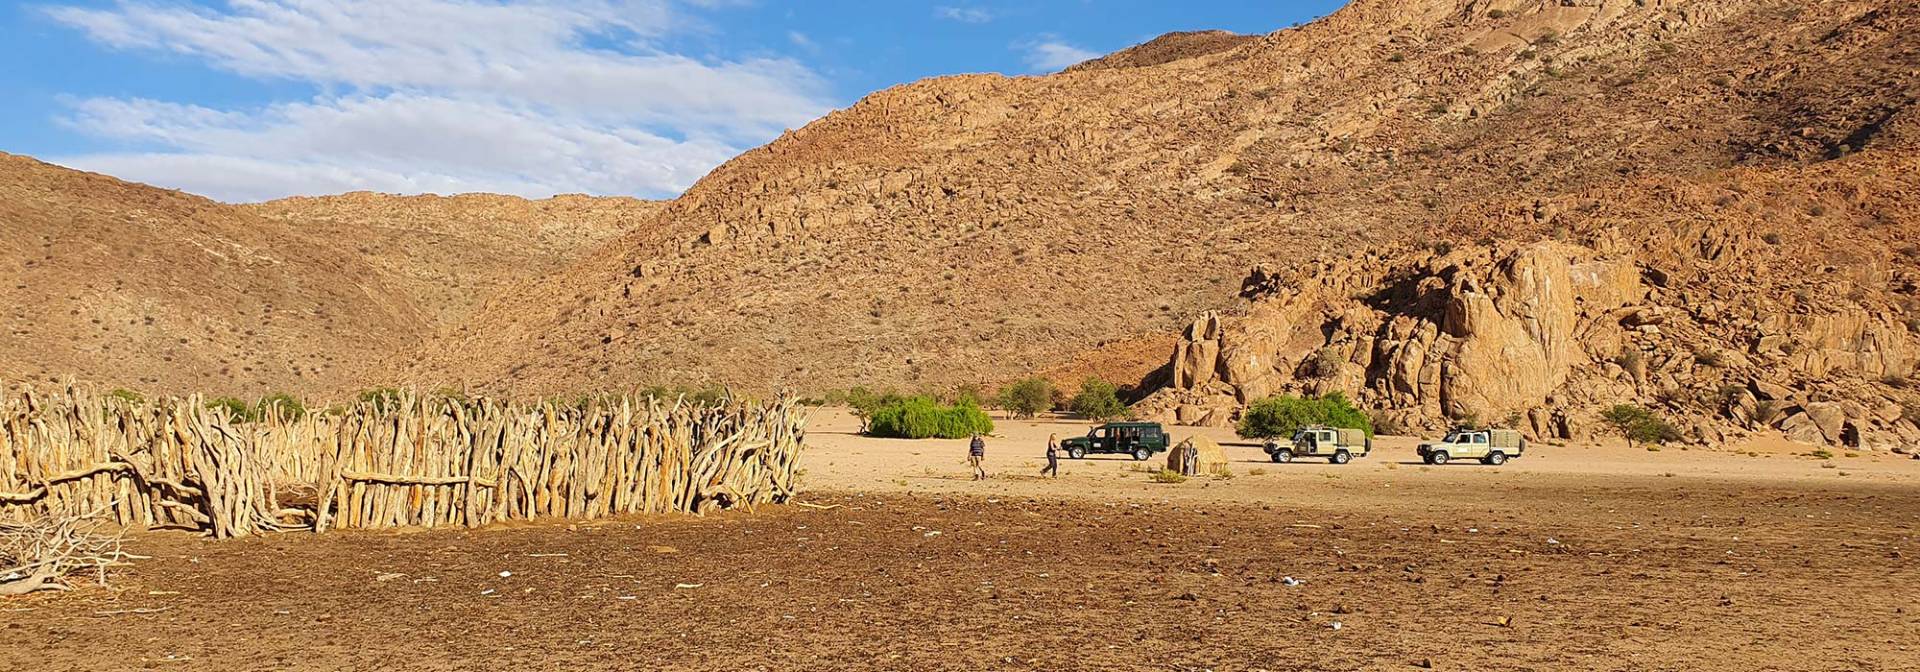 Traditionelles Dorf im Nordwesten Namibias